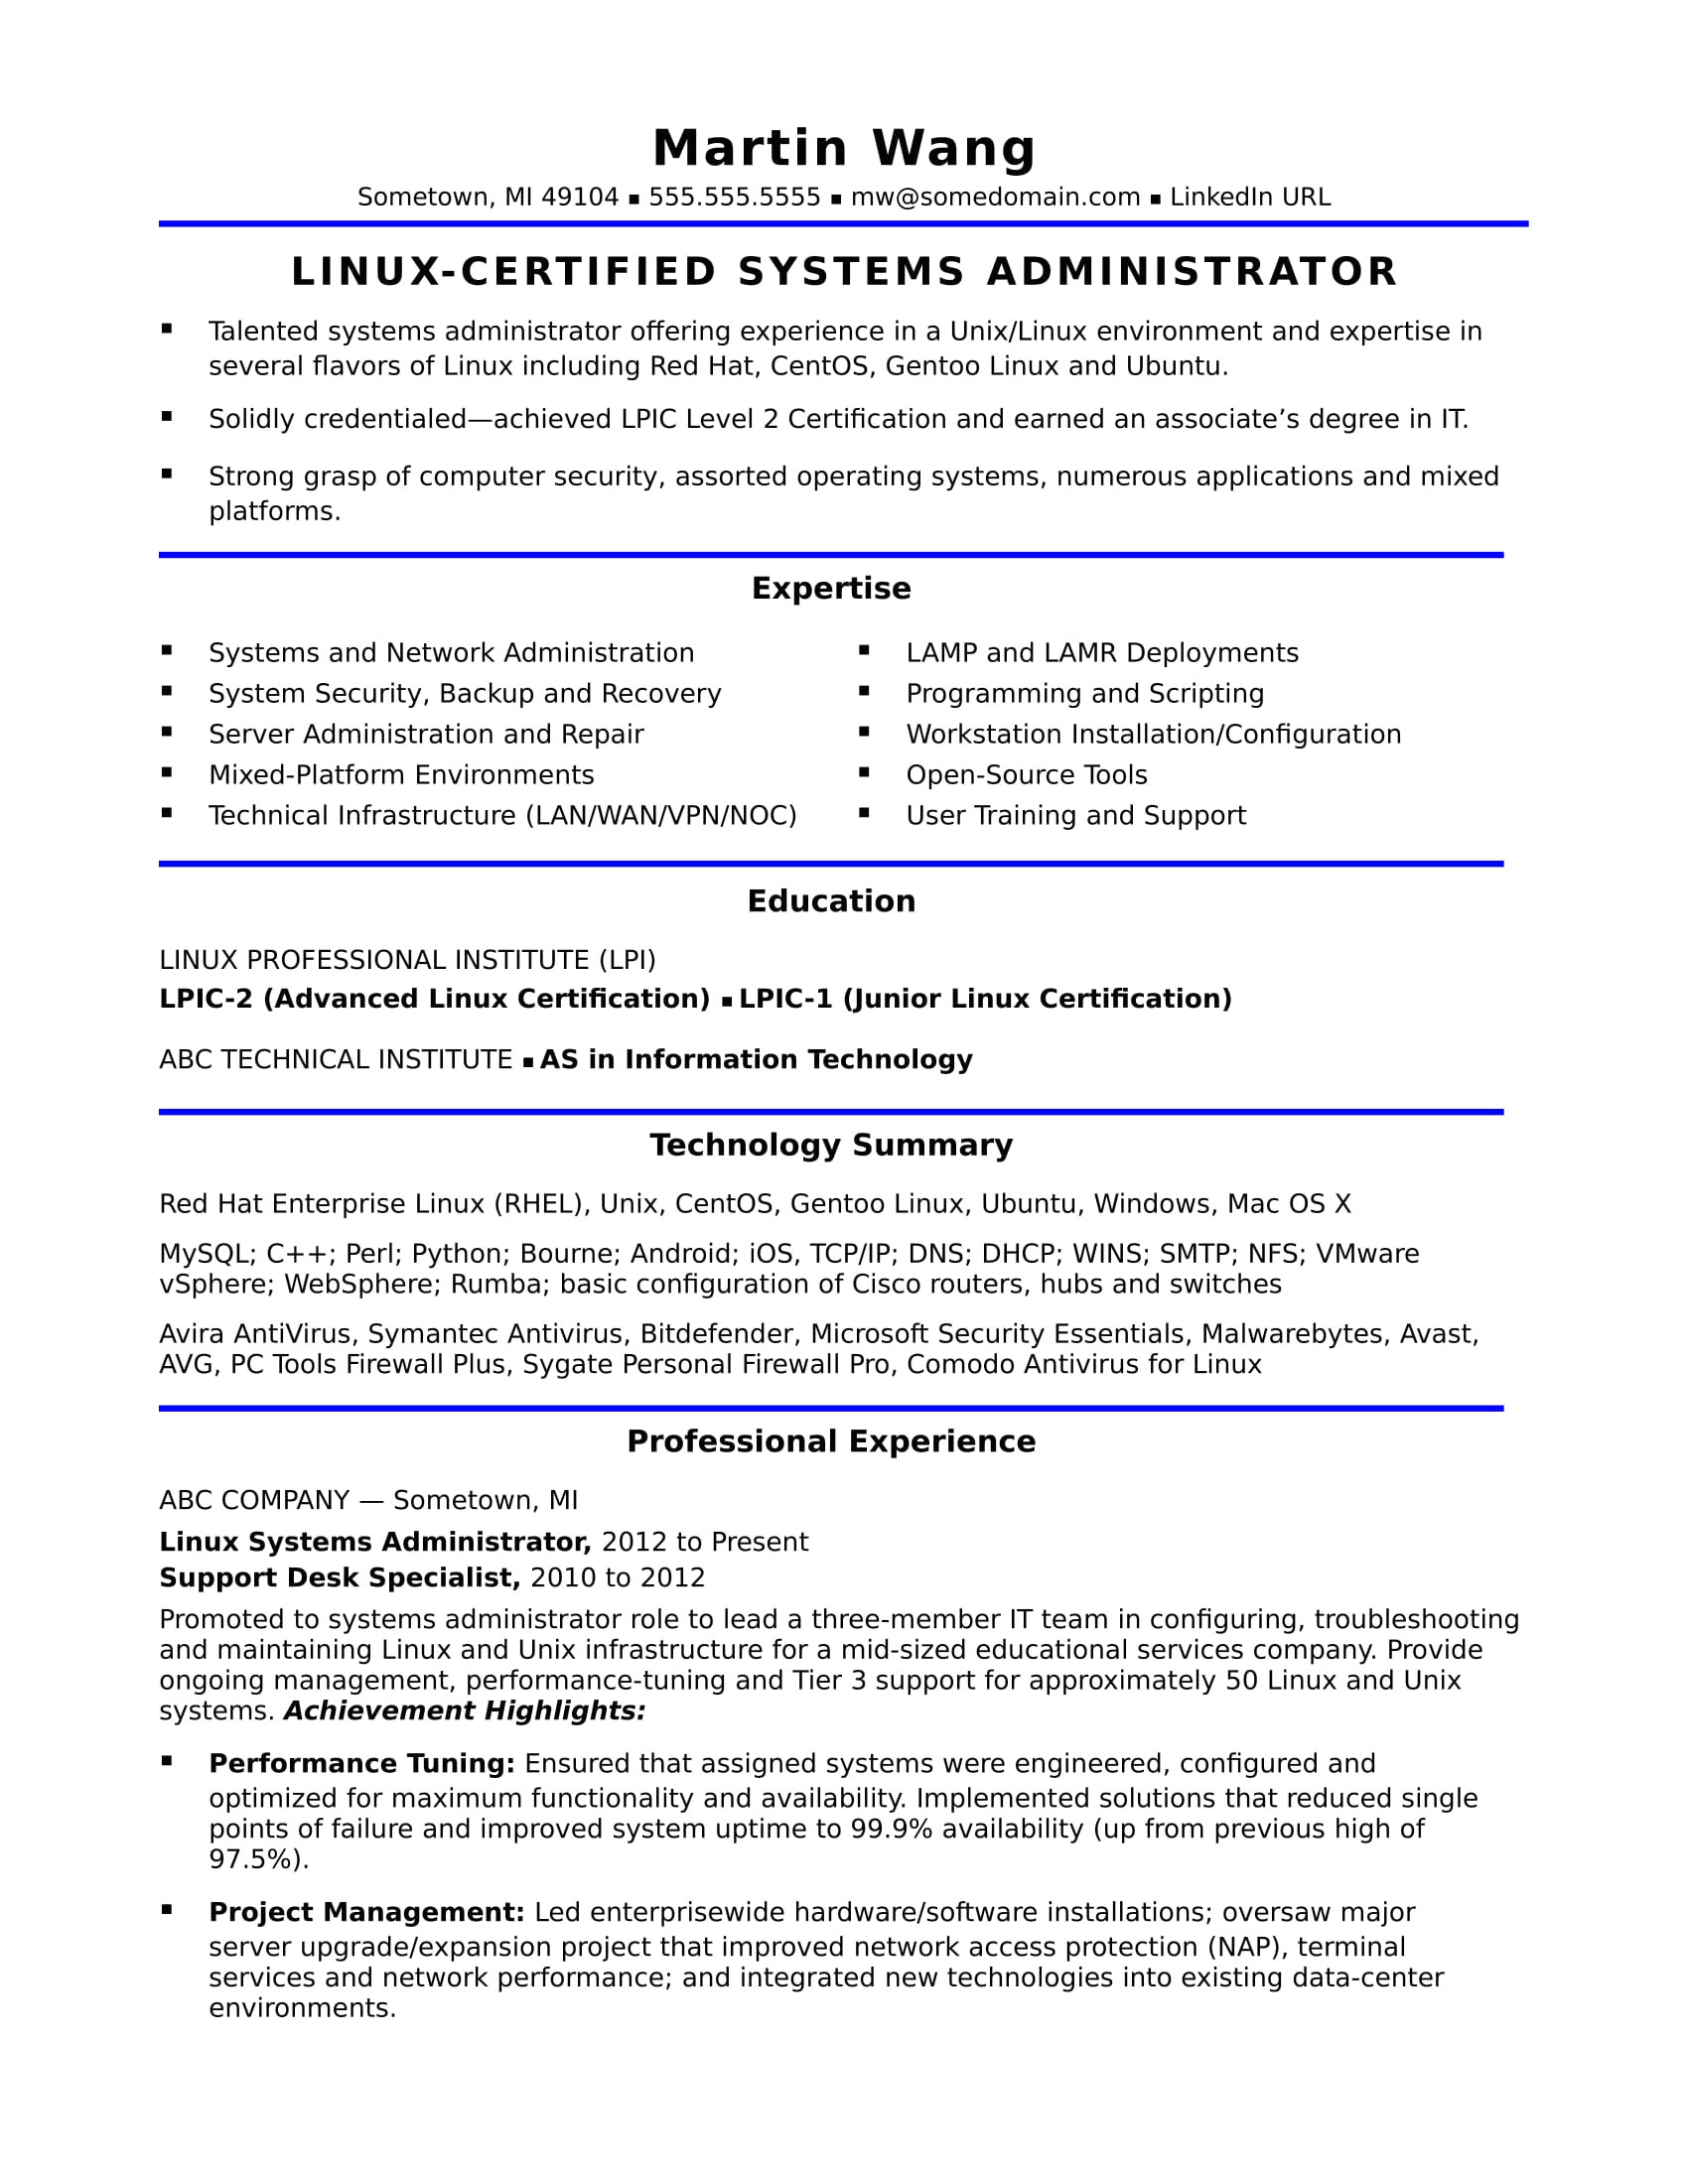 linux fresher resume format